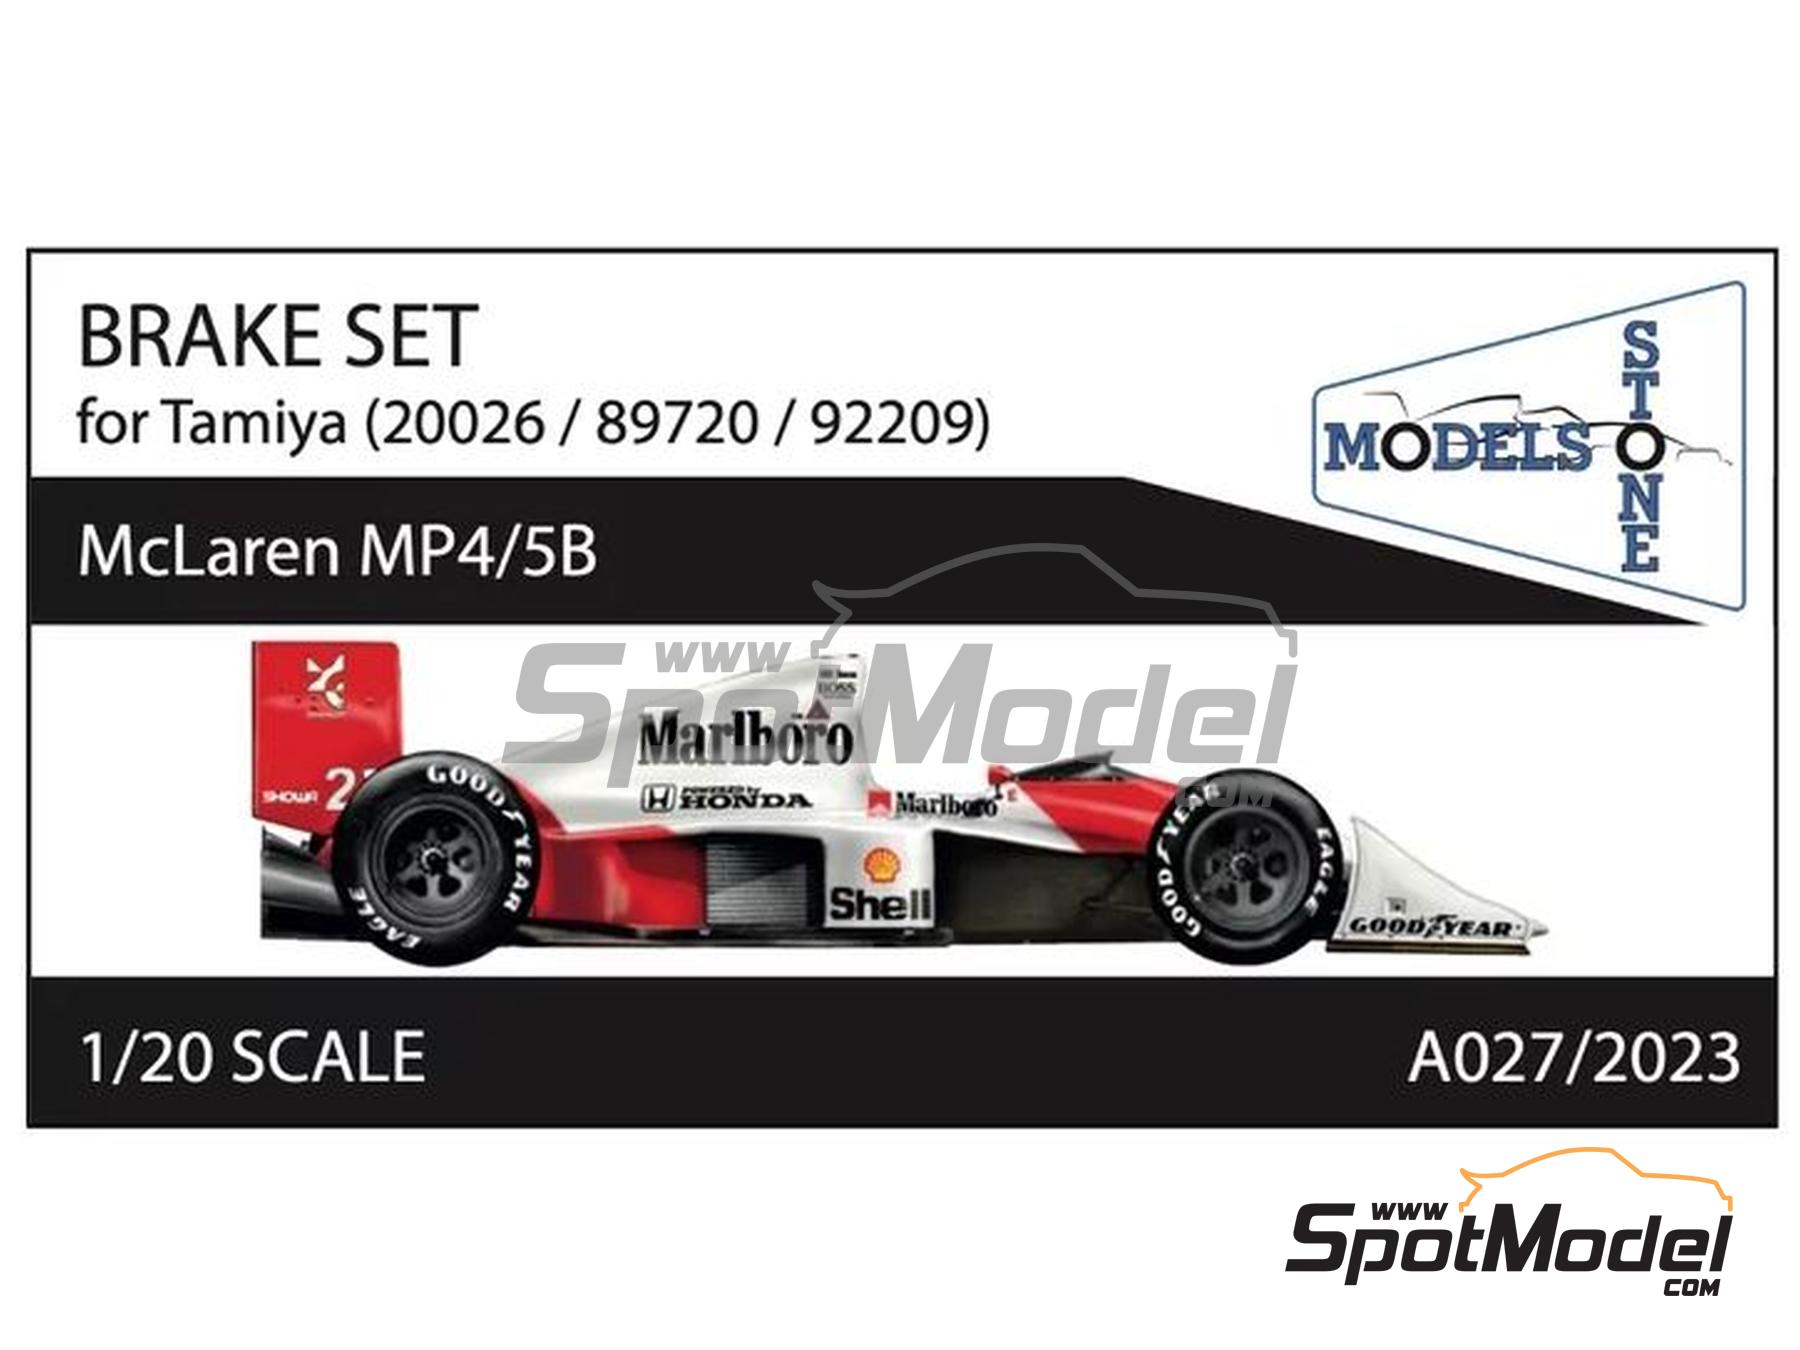 Stone Models A027/2023: Brakes 1/20 scale - McLaren Honda MP4/5B 